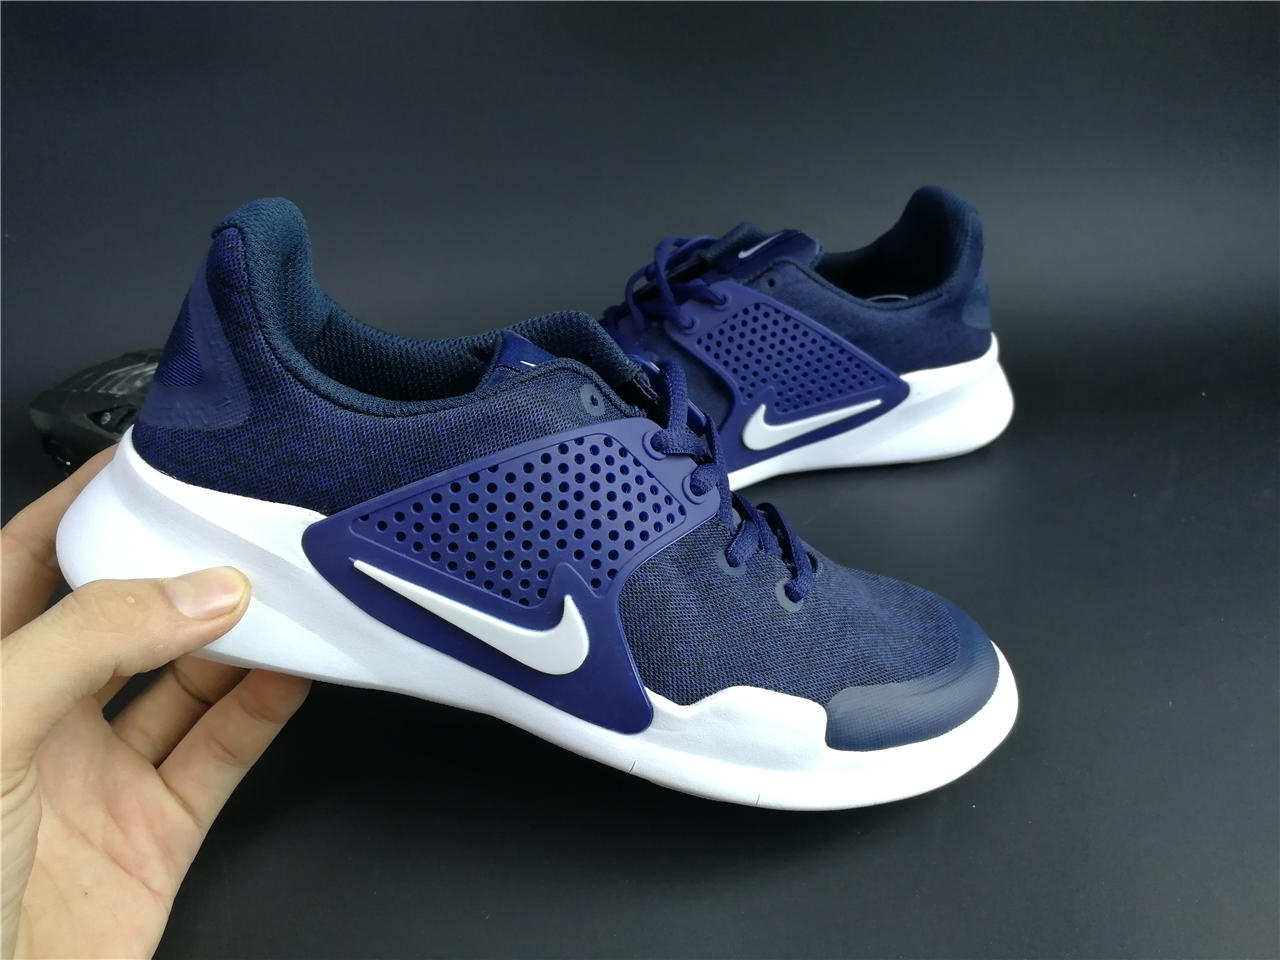 Nike Air Presto 4 Mesh Navy Blue White Shoes